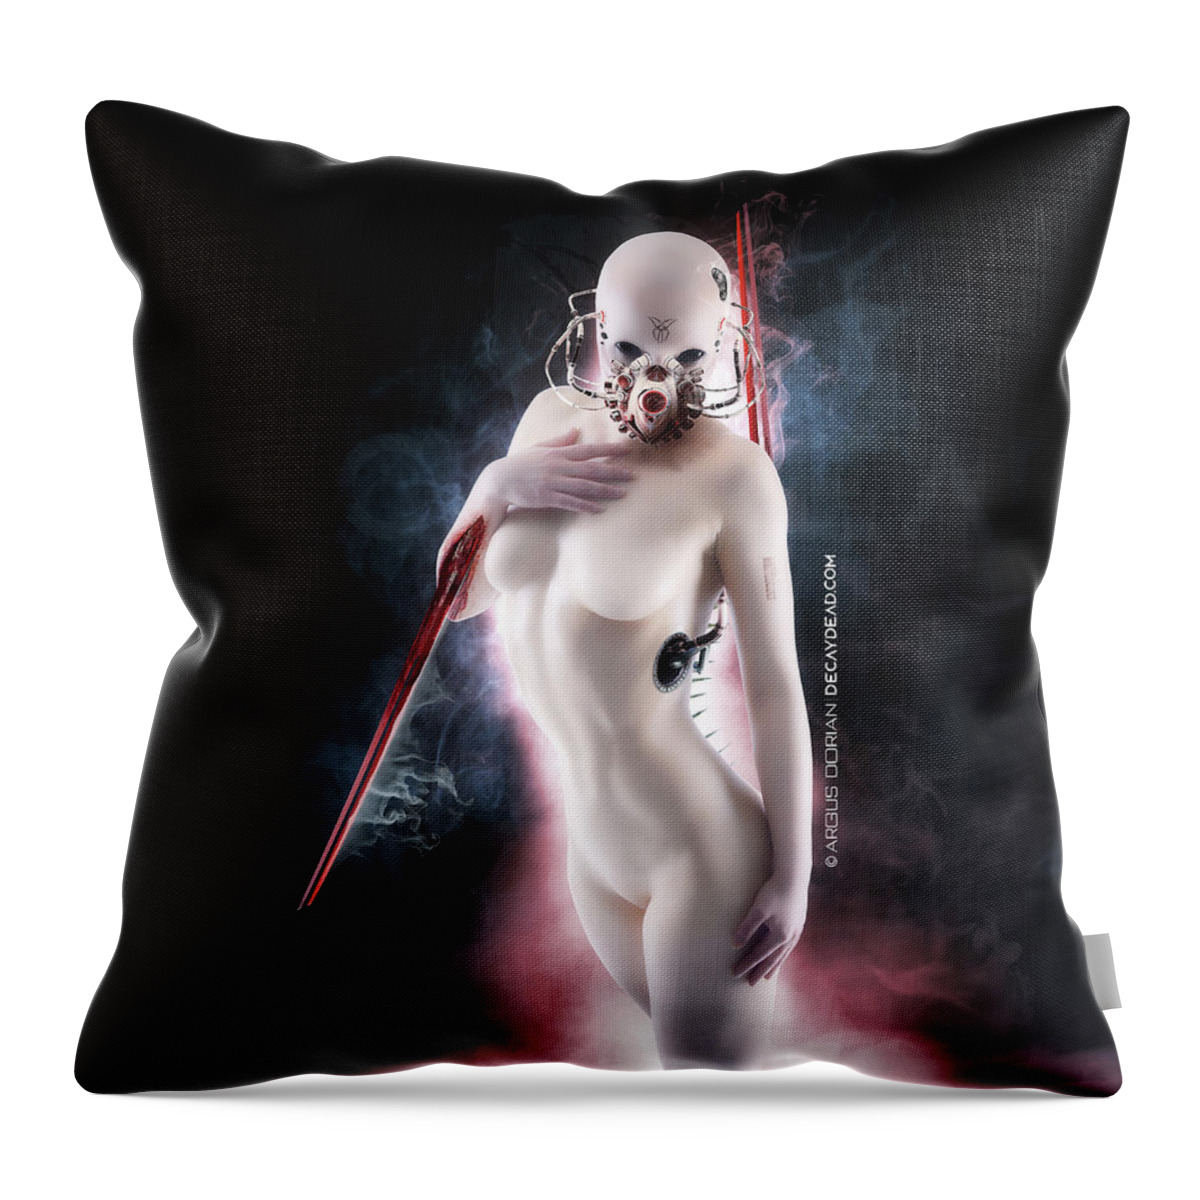 Argus Dorian Throw Pillow featuring the digital art Elina the first Hybrid Assassin v2 by Argus Dorian